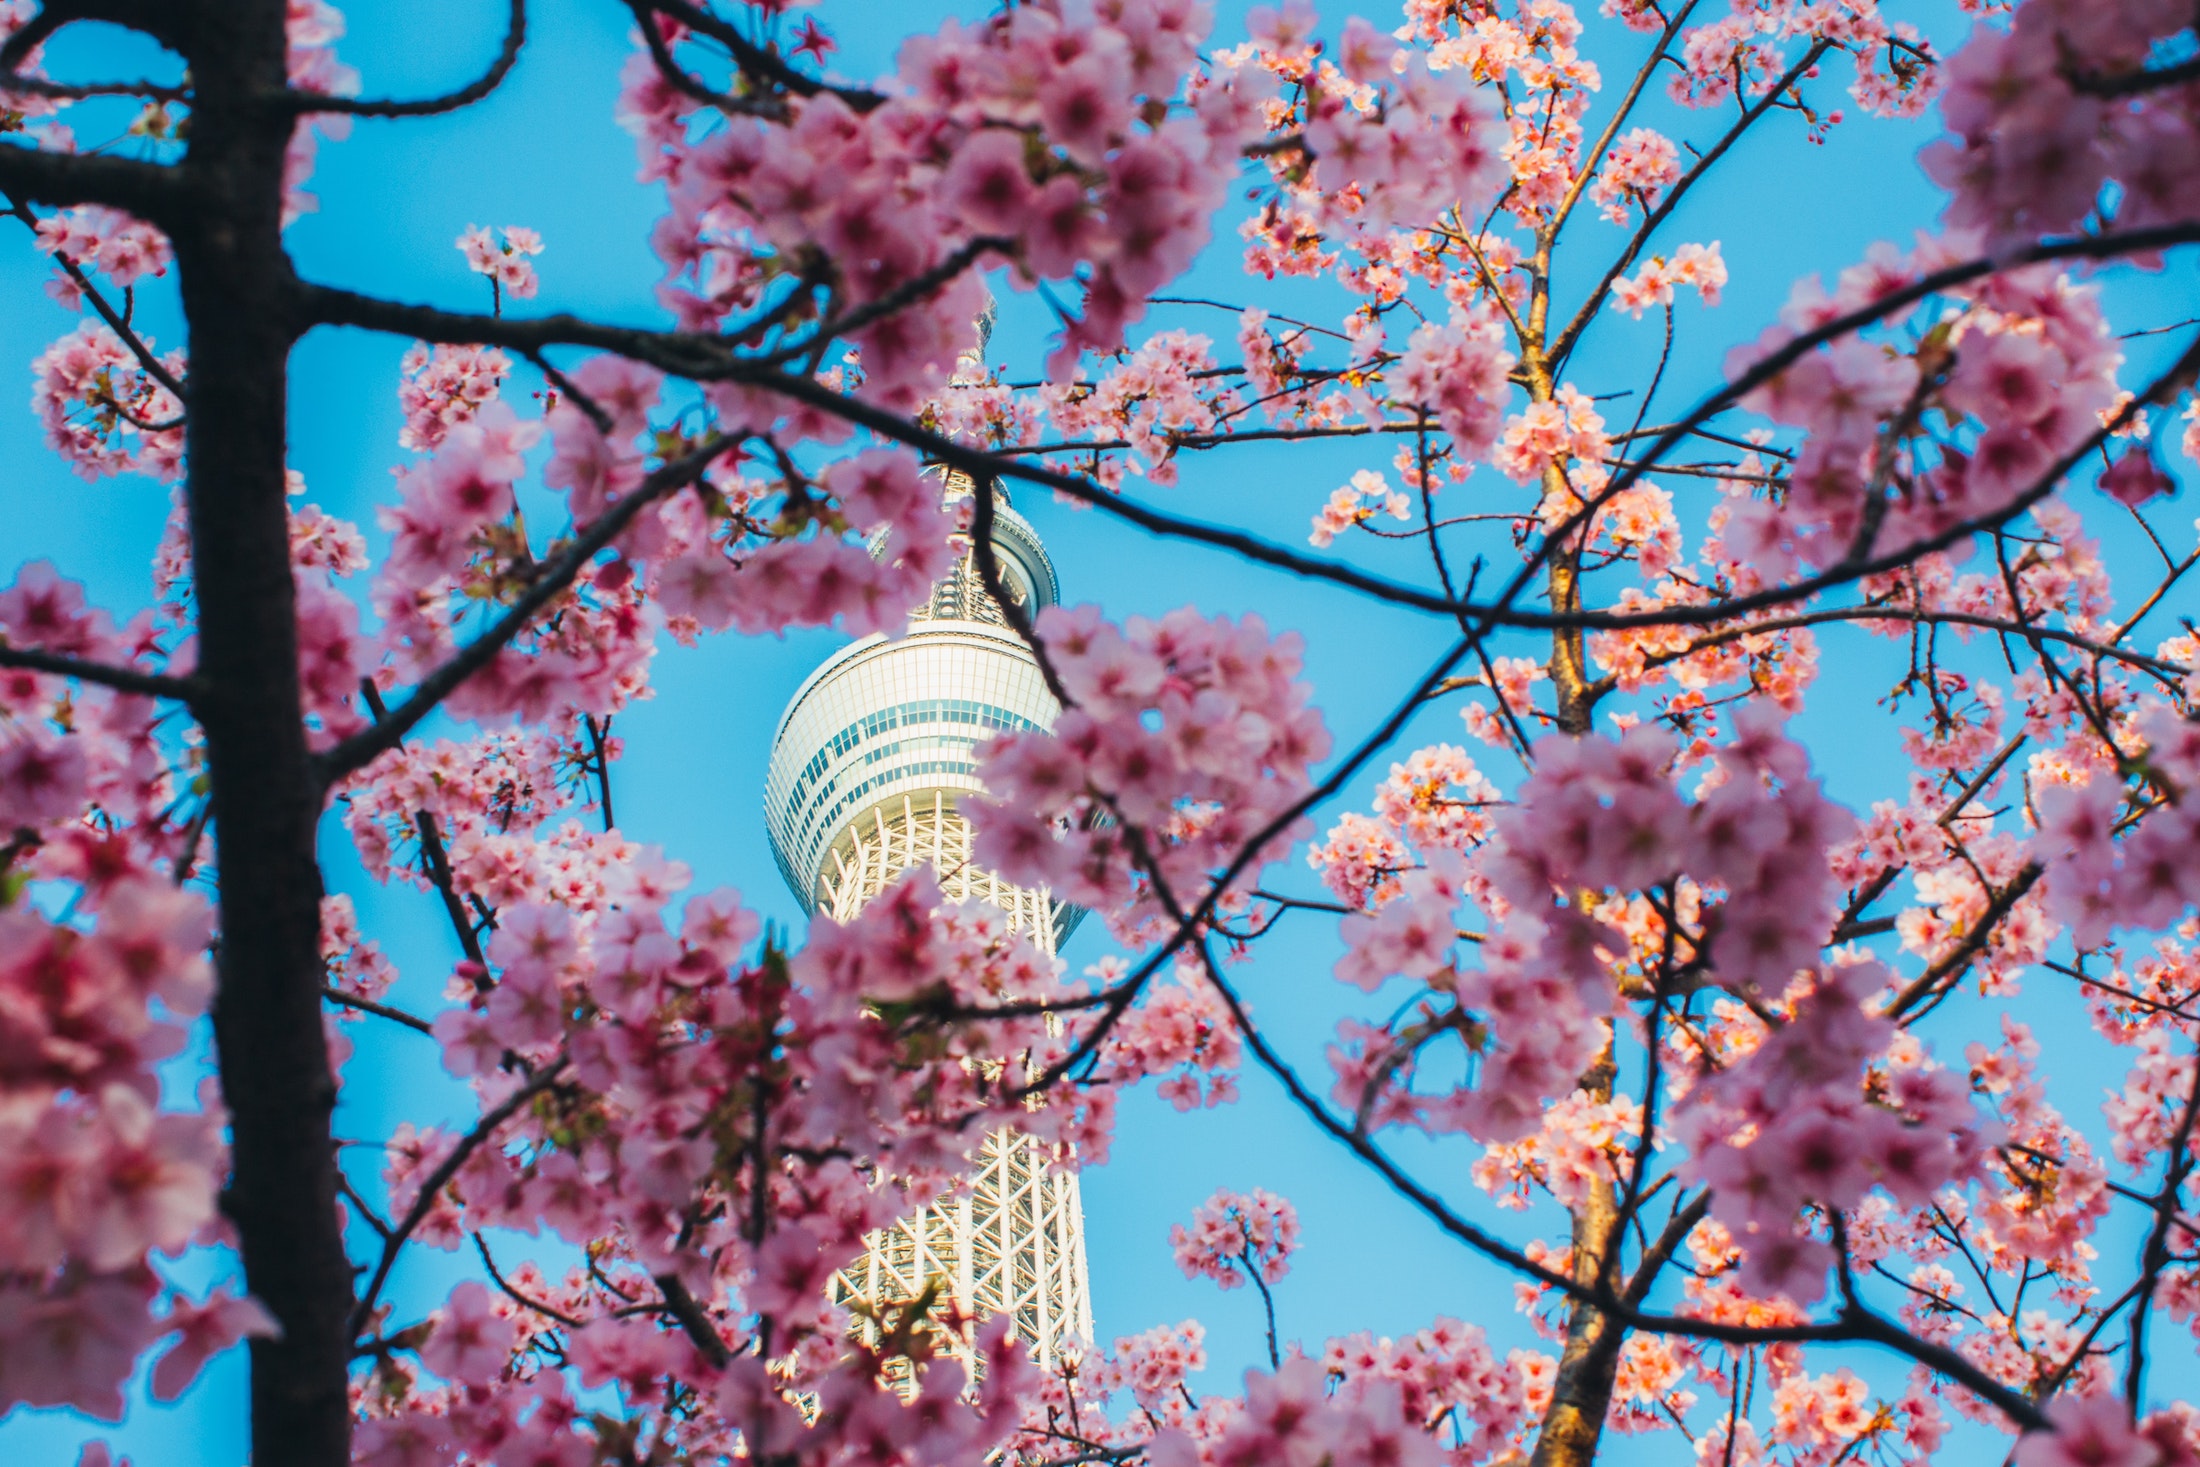 Flora Vesterberg’s Cultural Highlights Of Tokyo This Sakura Season